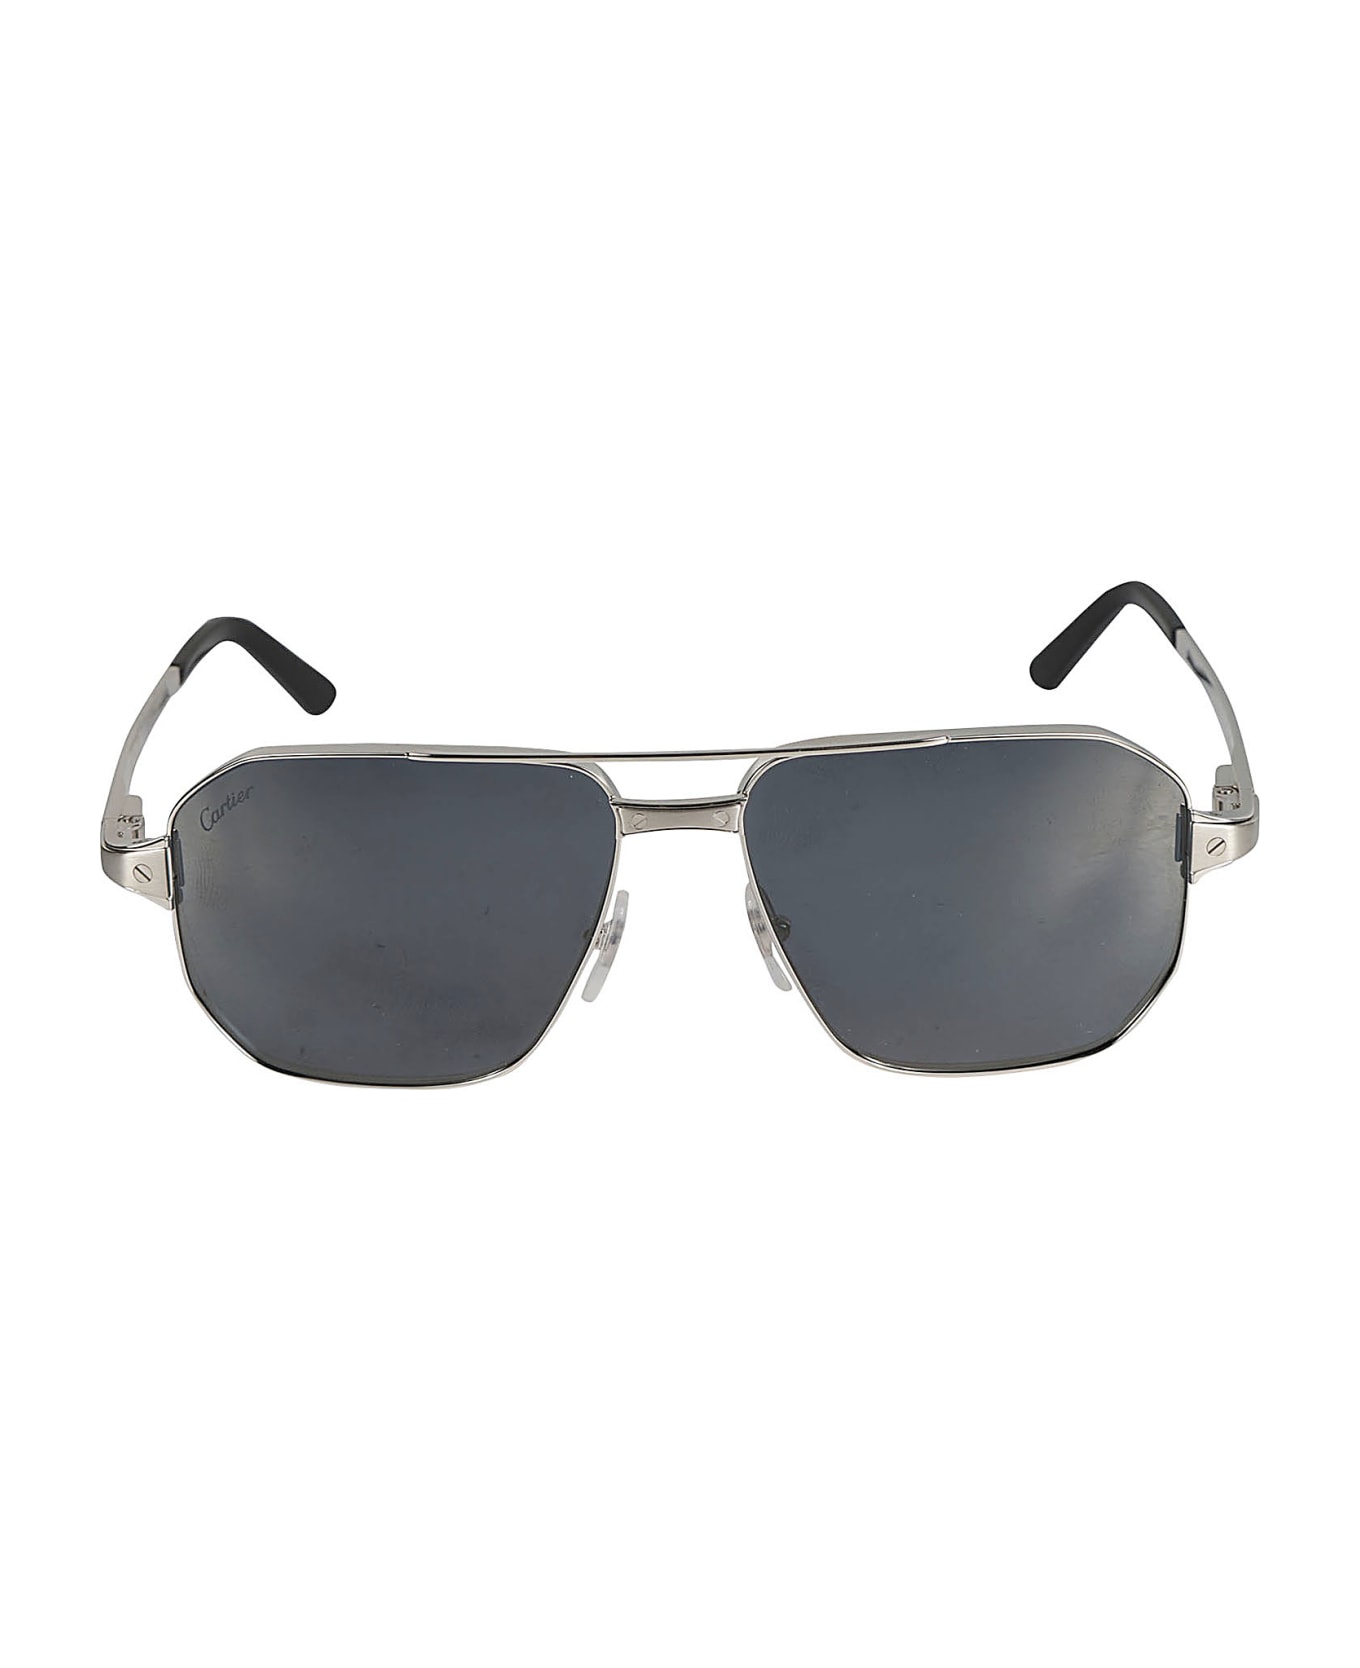 Cartier Eyewear Aviator Sunglasses - Silver/Blue